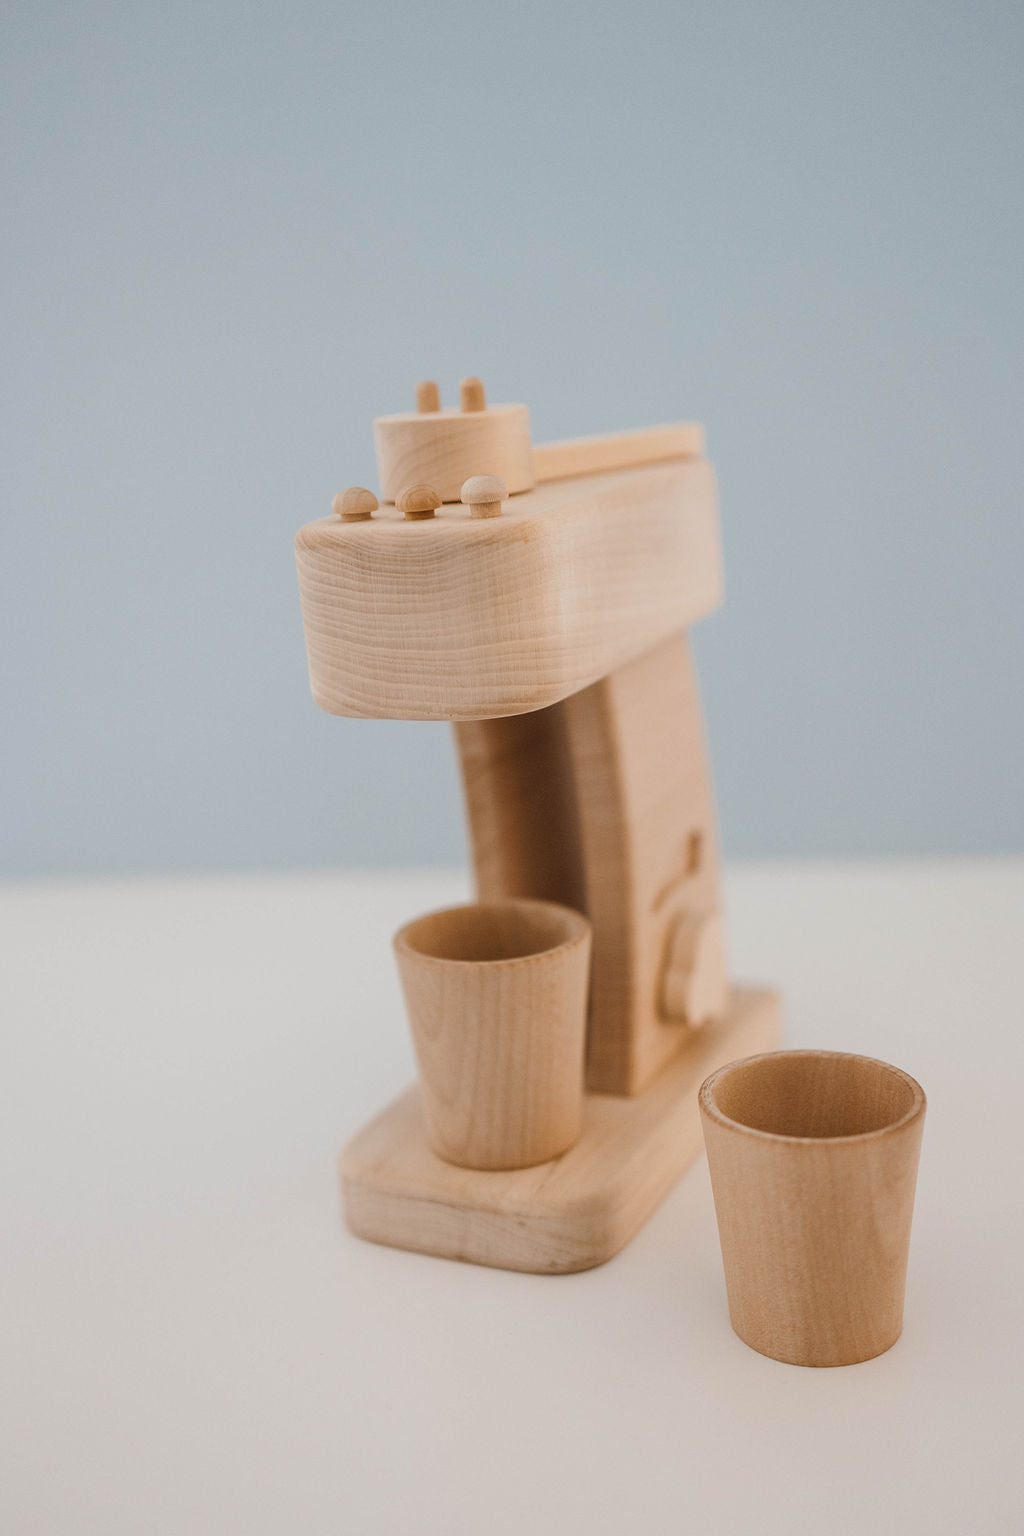 Wood Espresso Coffee Maker Toy Set